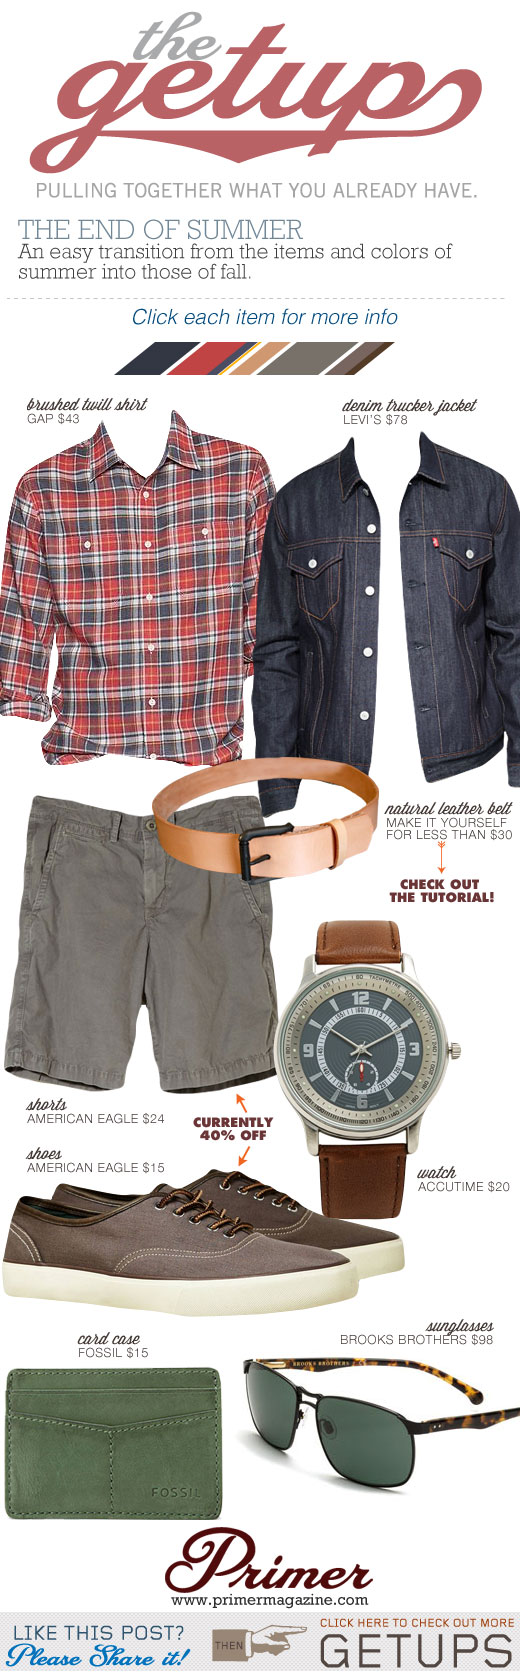 Getup End of Summer - Denim trucker jacket, red plad shirt, gray shorts, tan belt